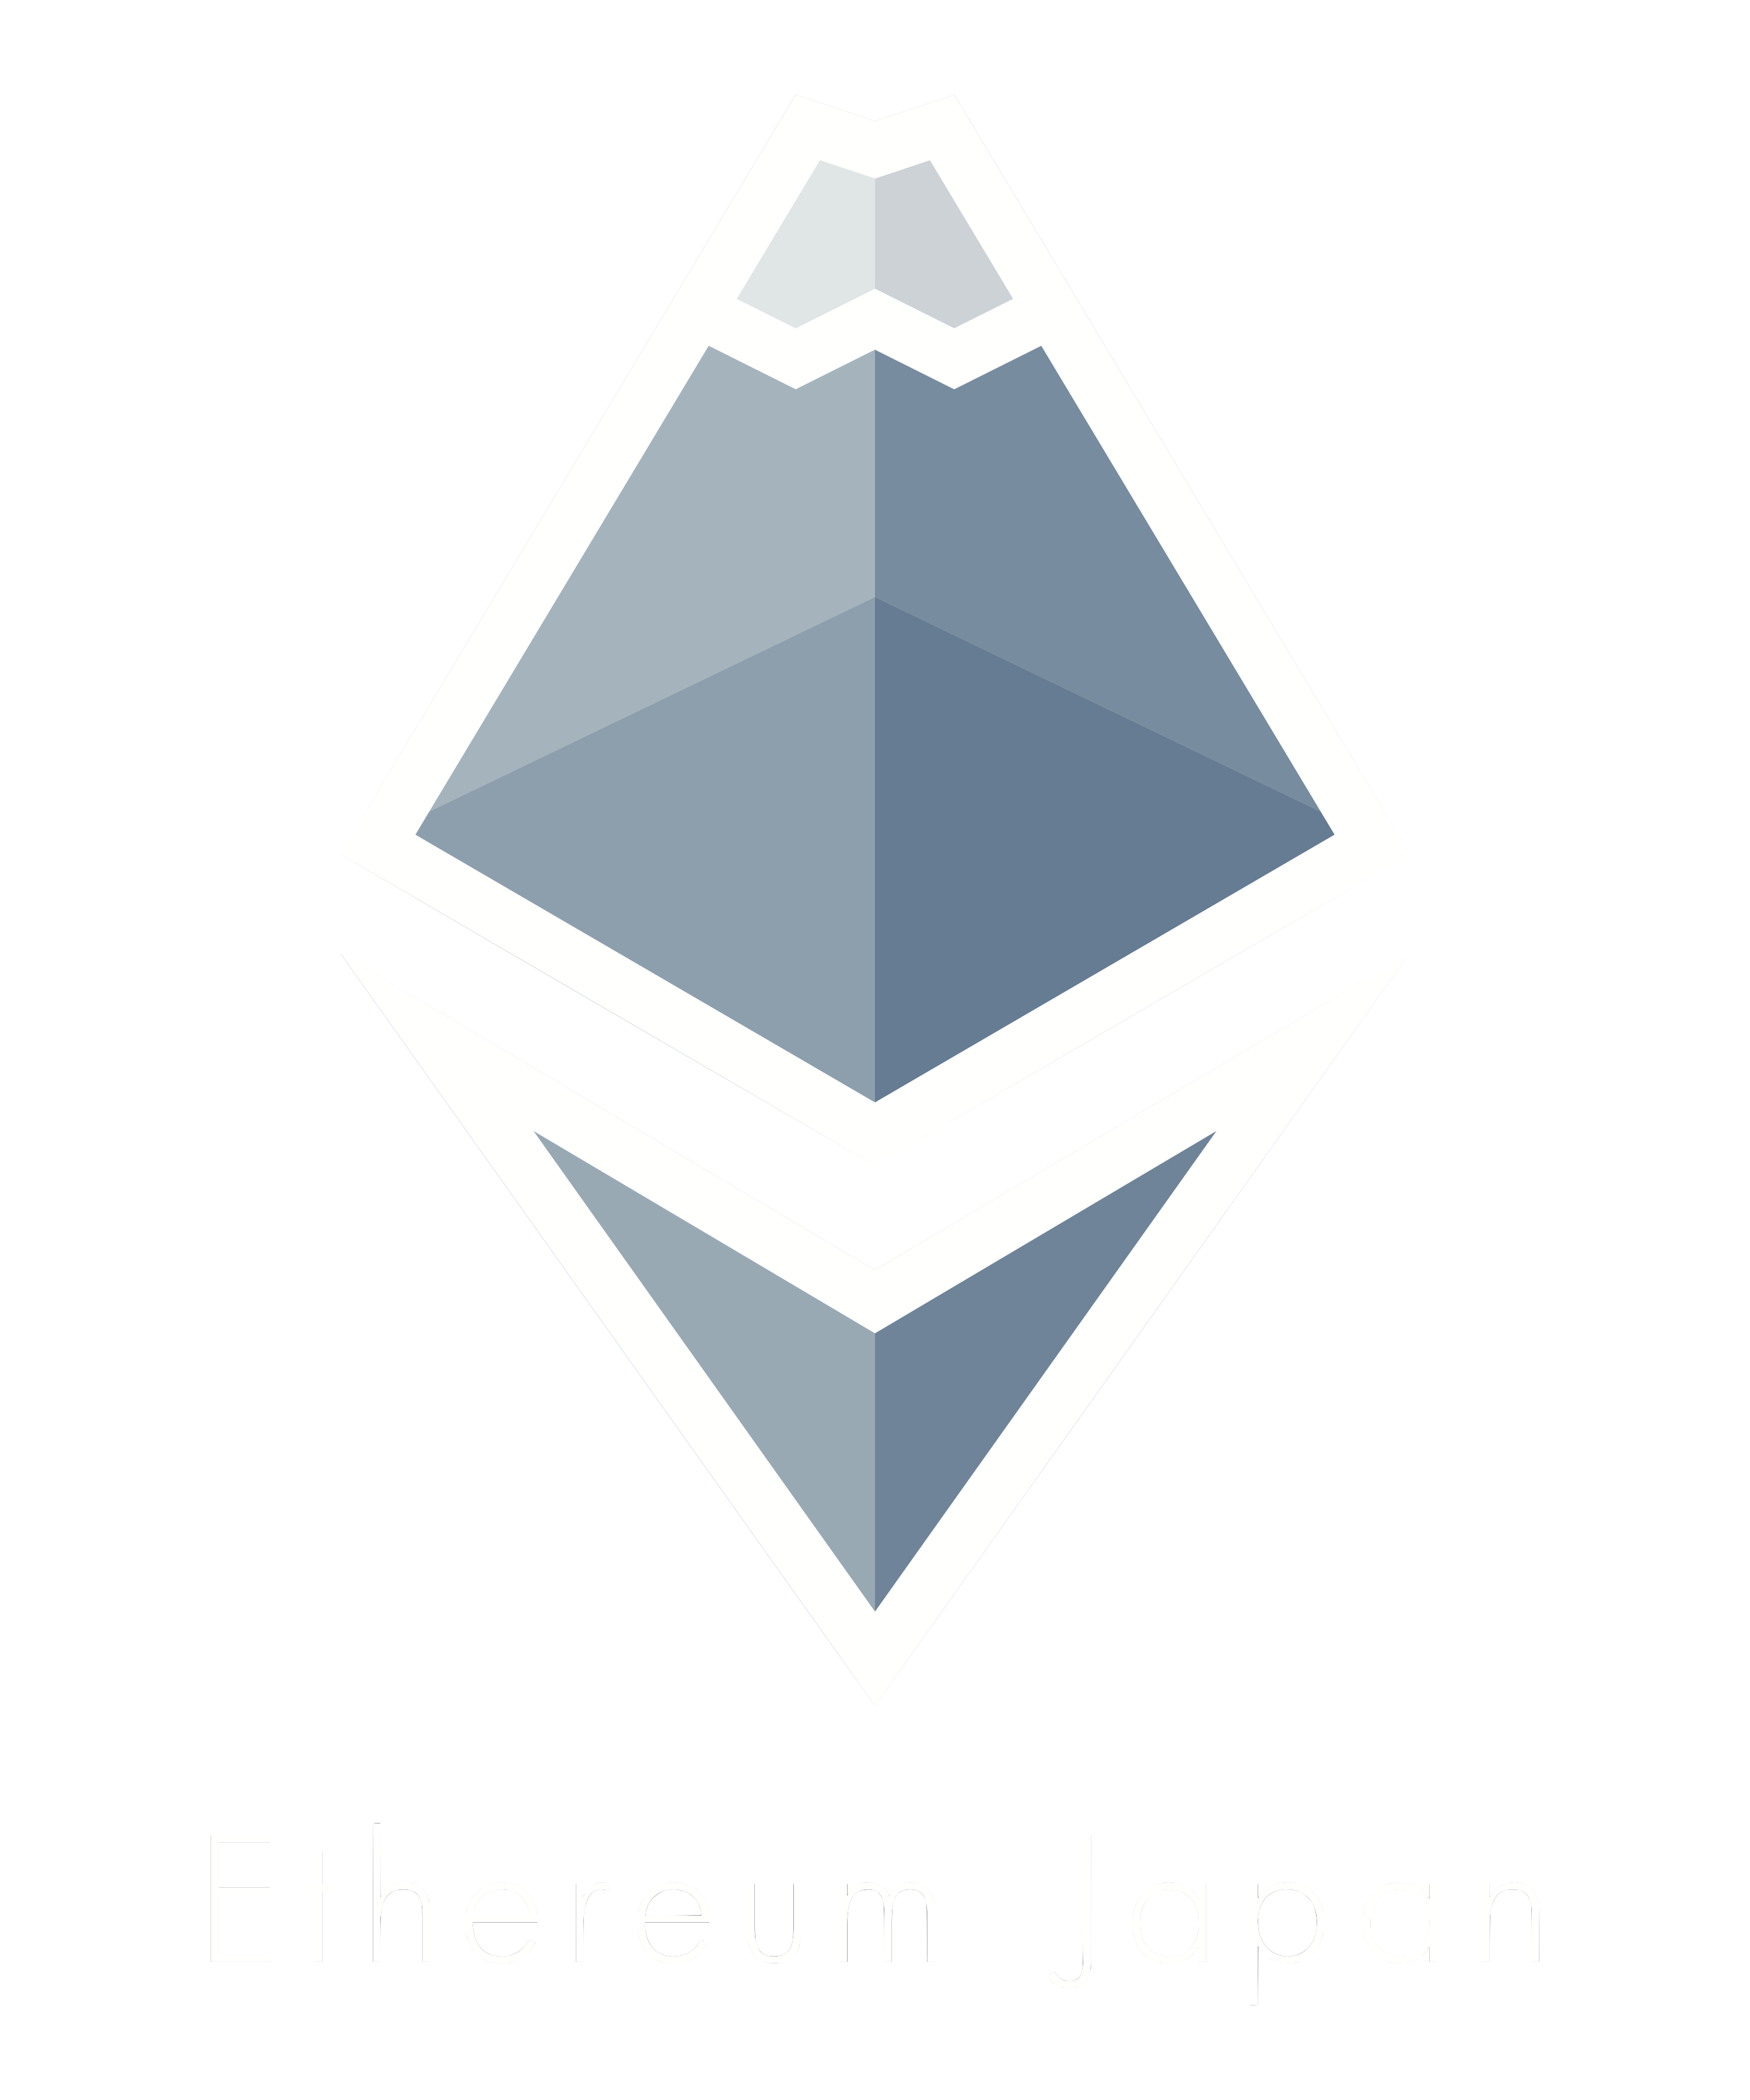 Ethereum Japan